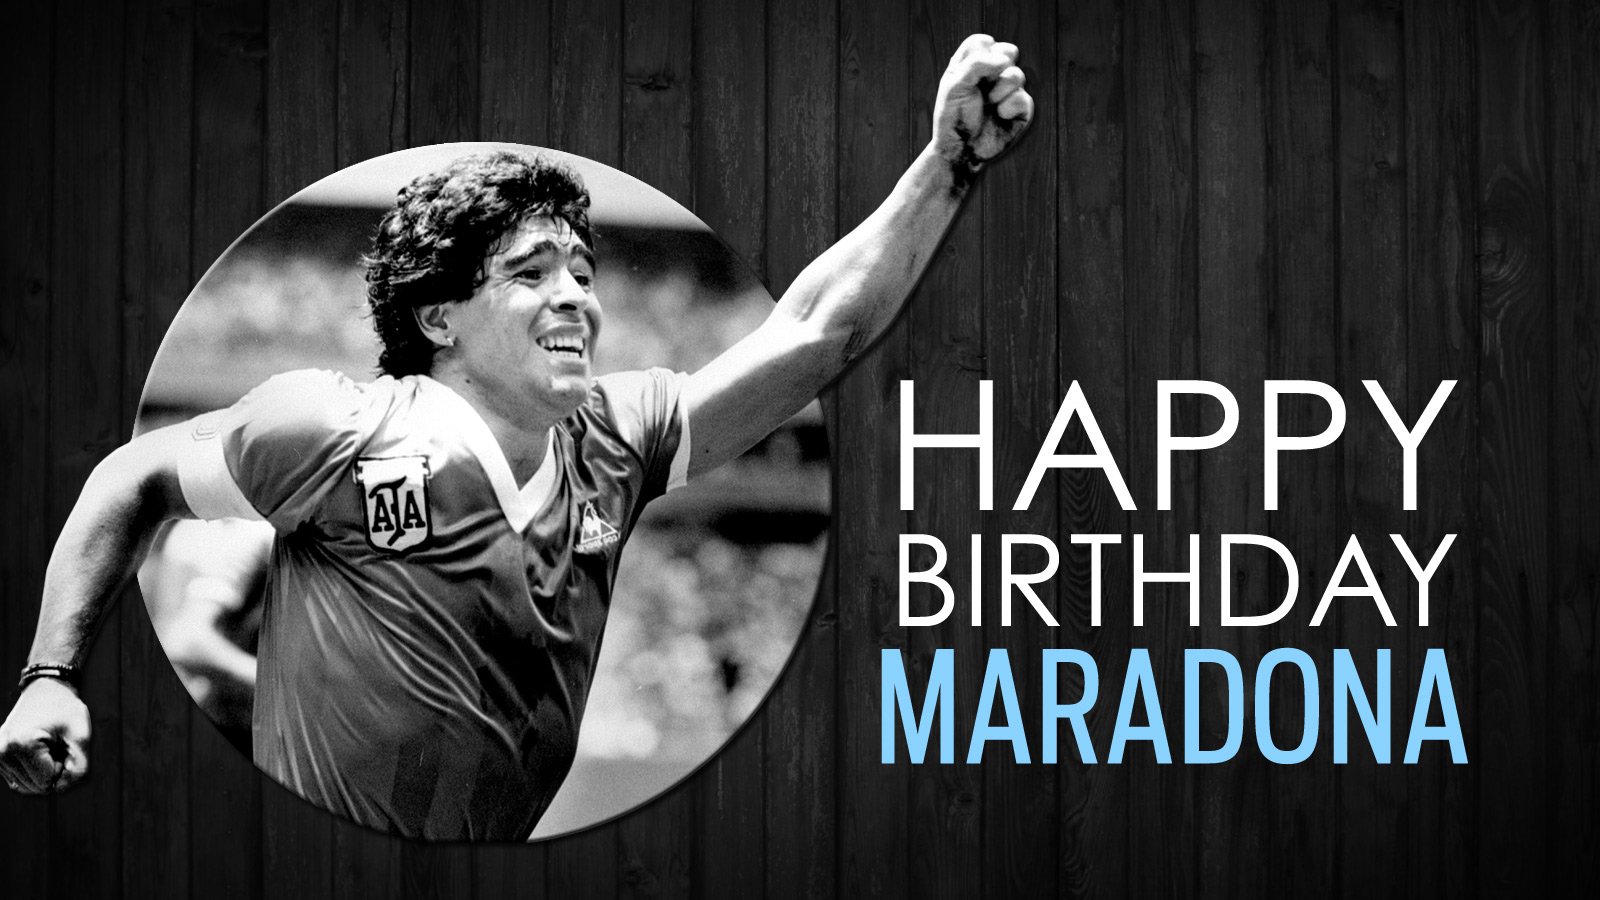 Happy birthday to the one and only Diego Armando Maradona!  